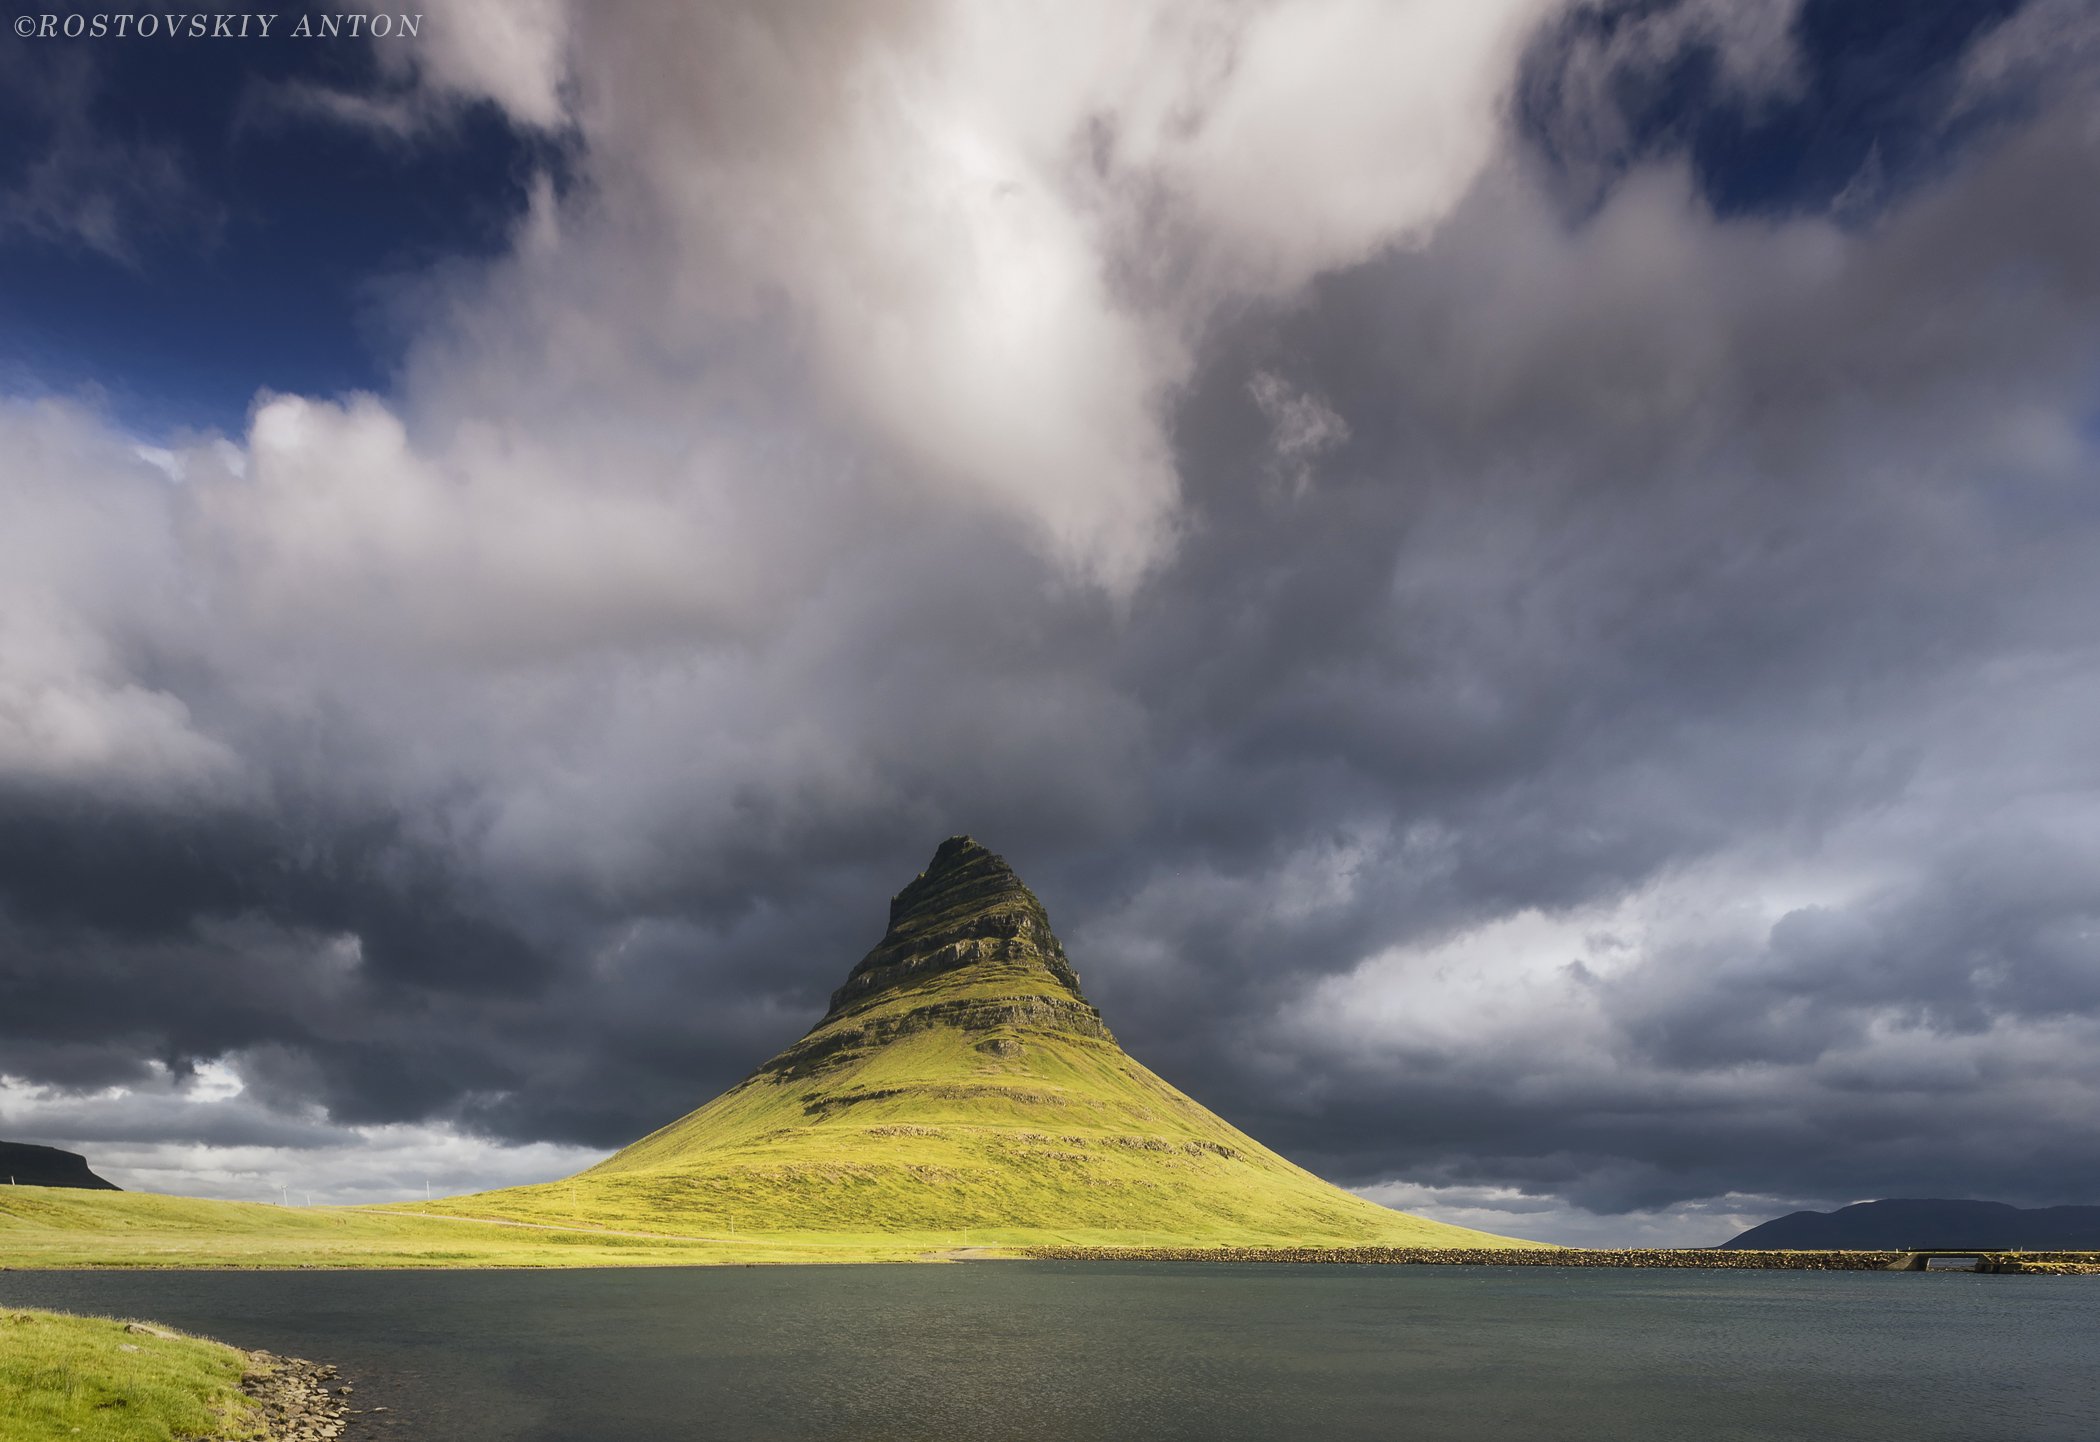 Исландия, фототур, Iceland, Phototour, Kirkjufell, Mountain, Антон Ростовский